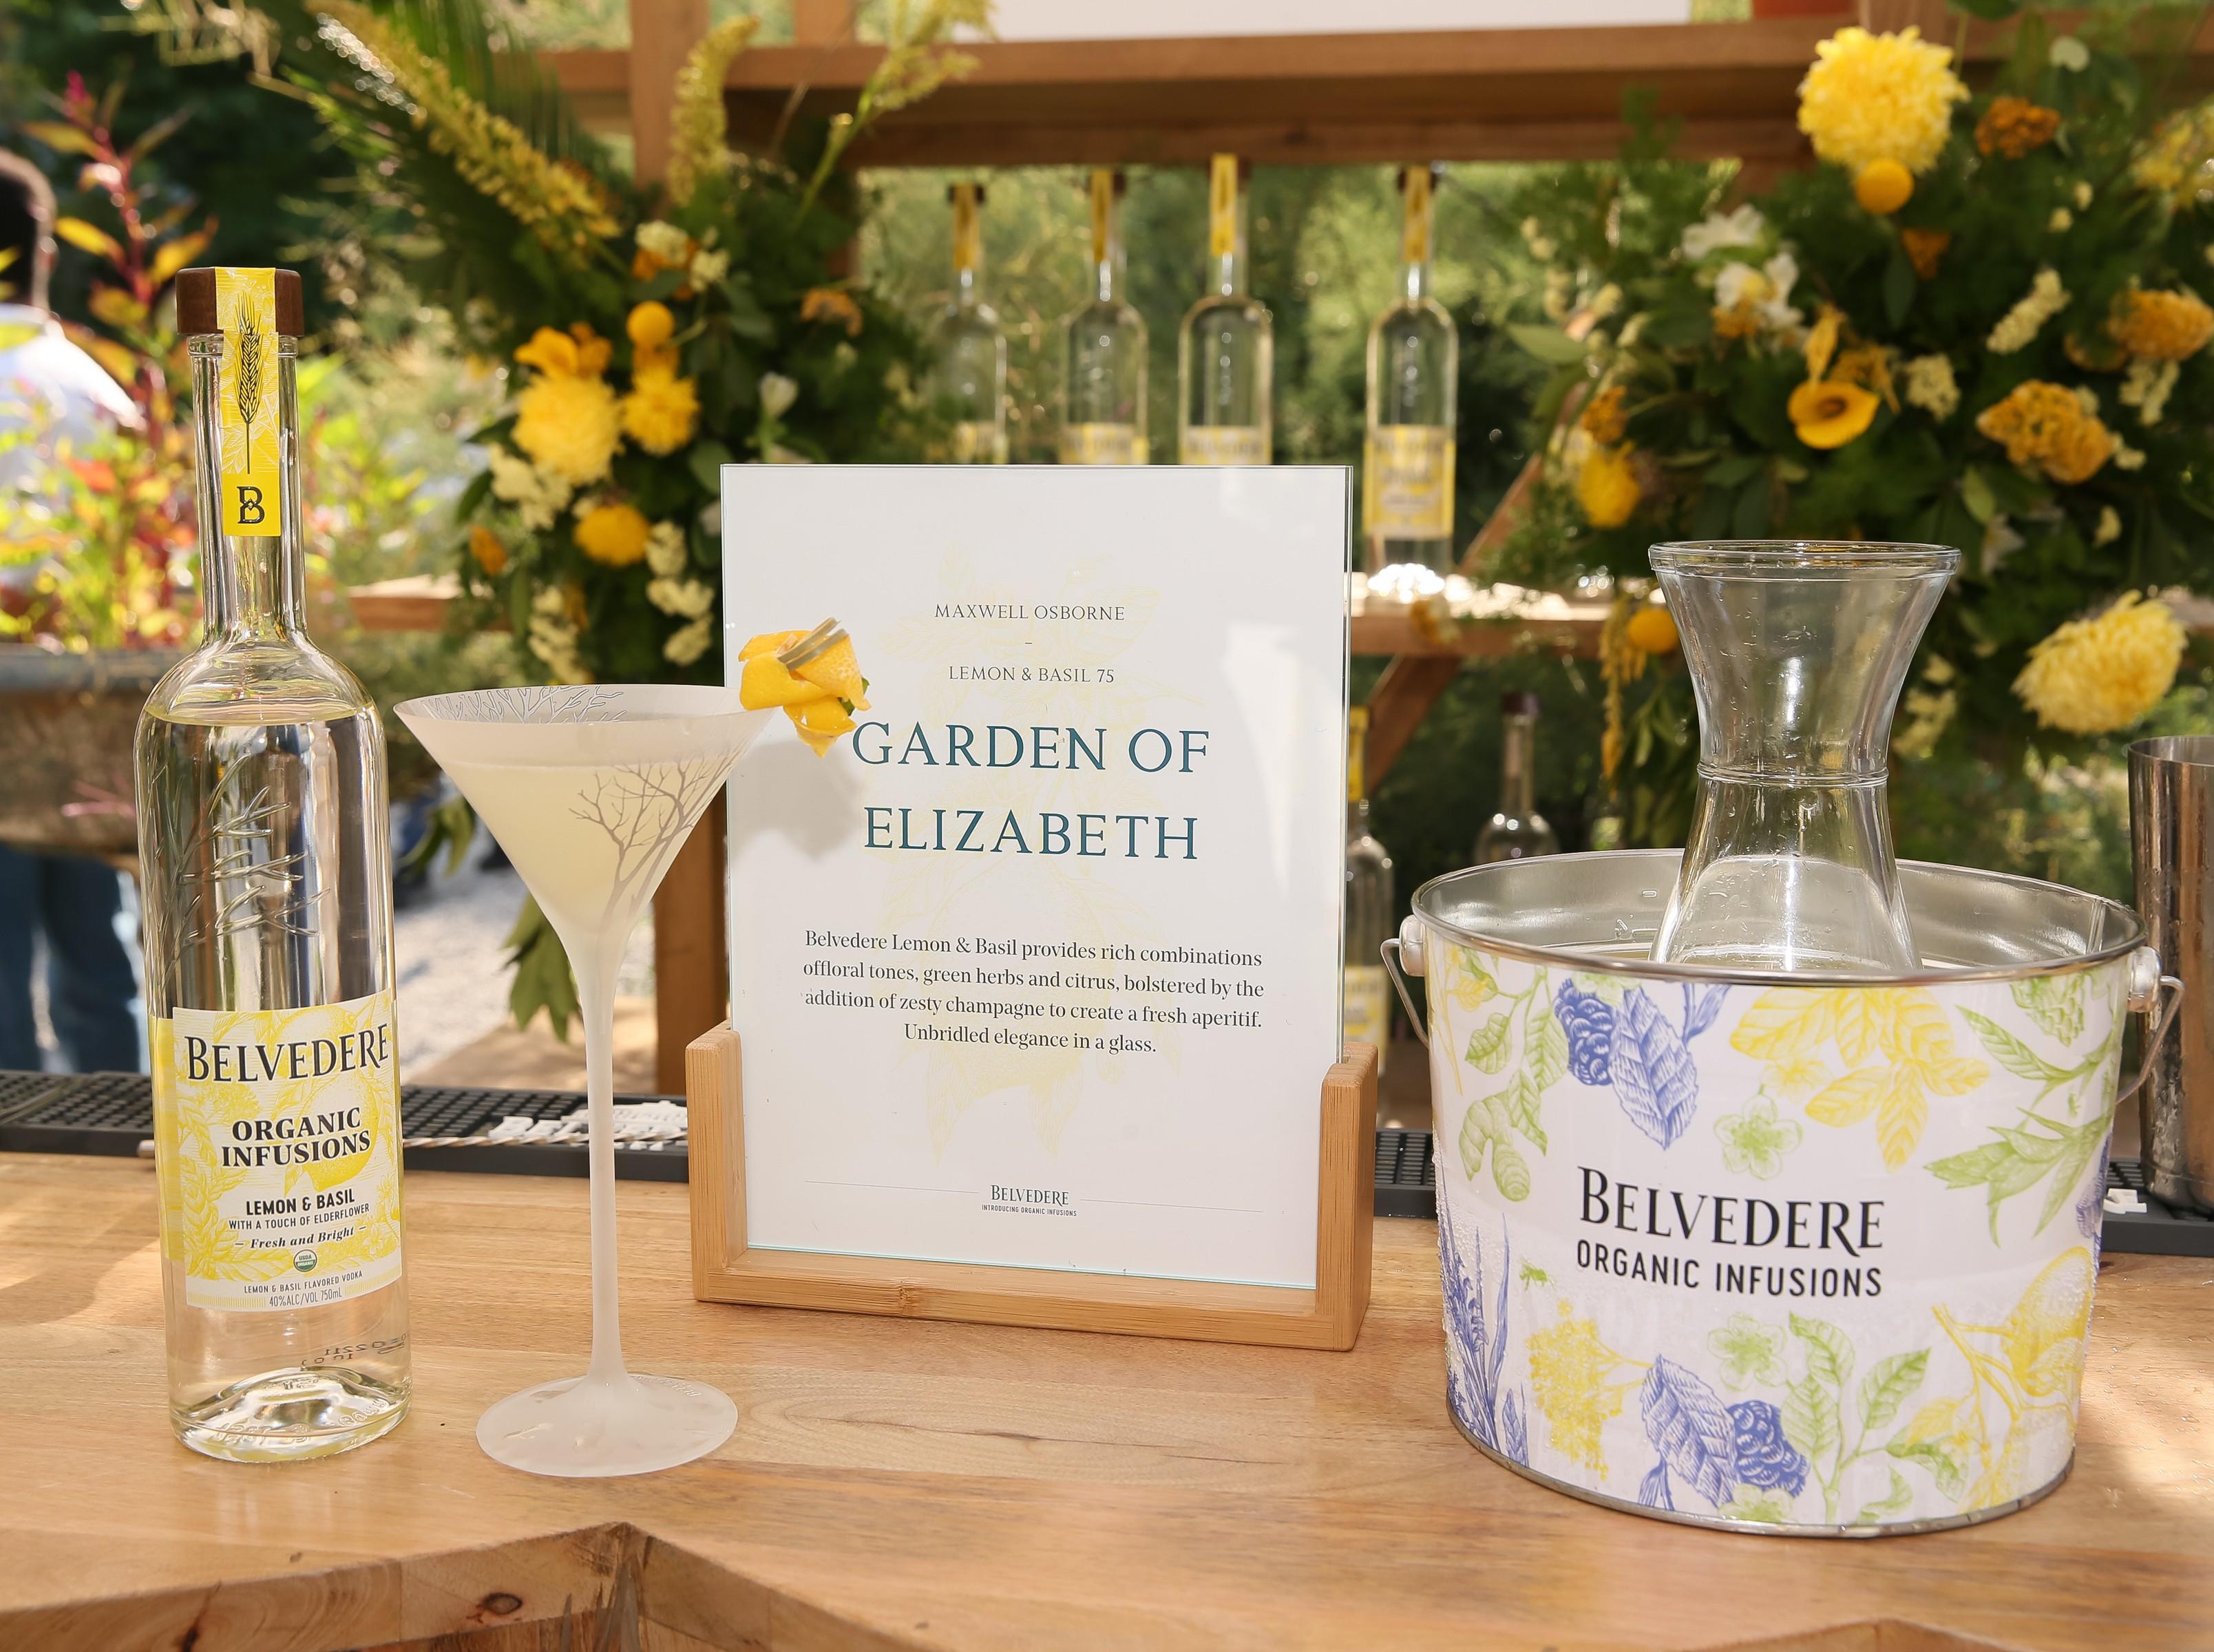 Belvedere Organic Infusions Lemon & Basil Vodka (750 ml)